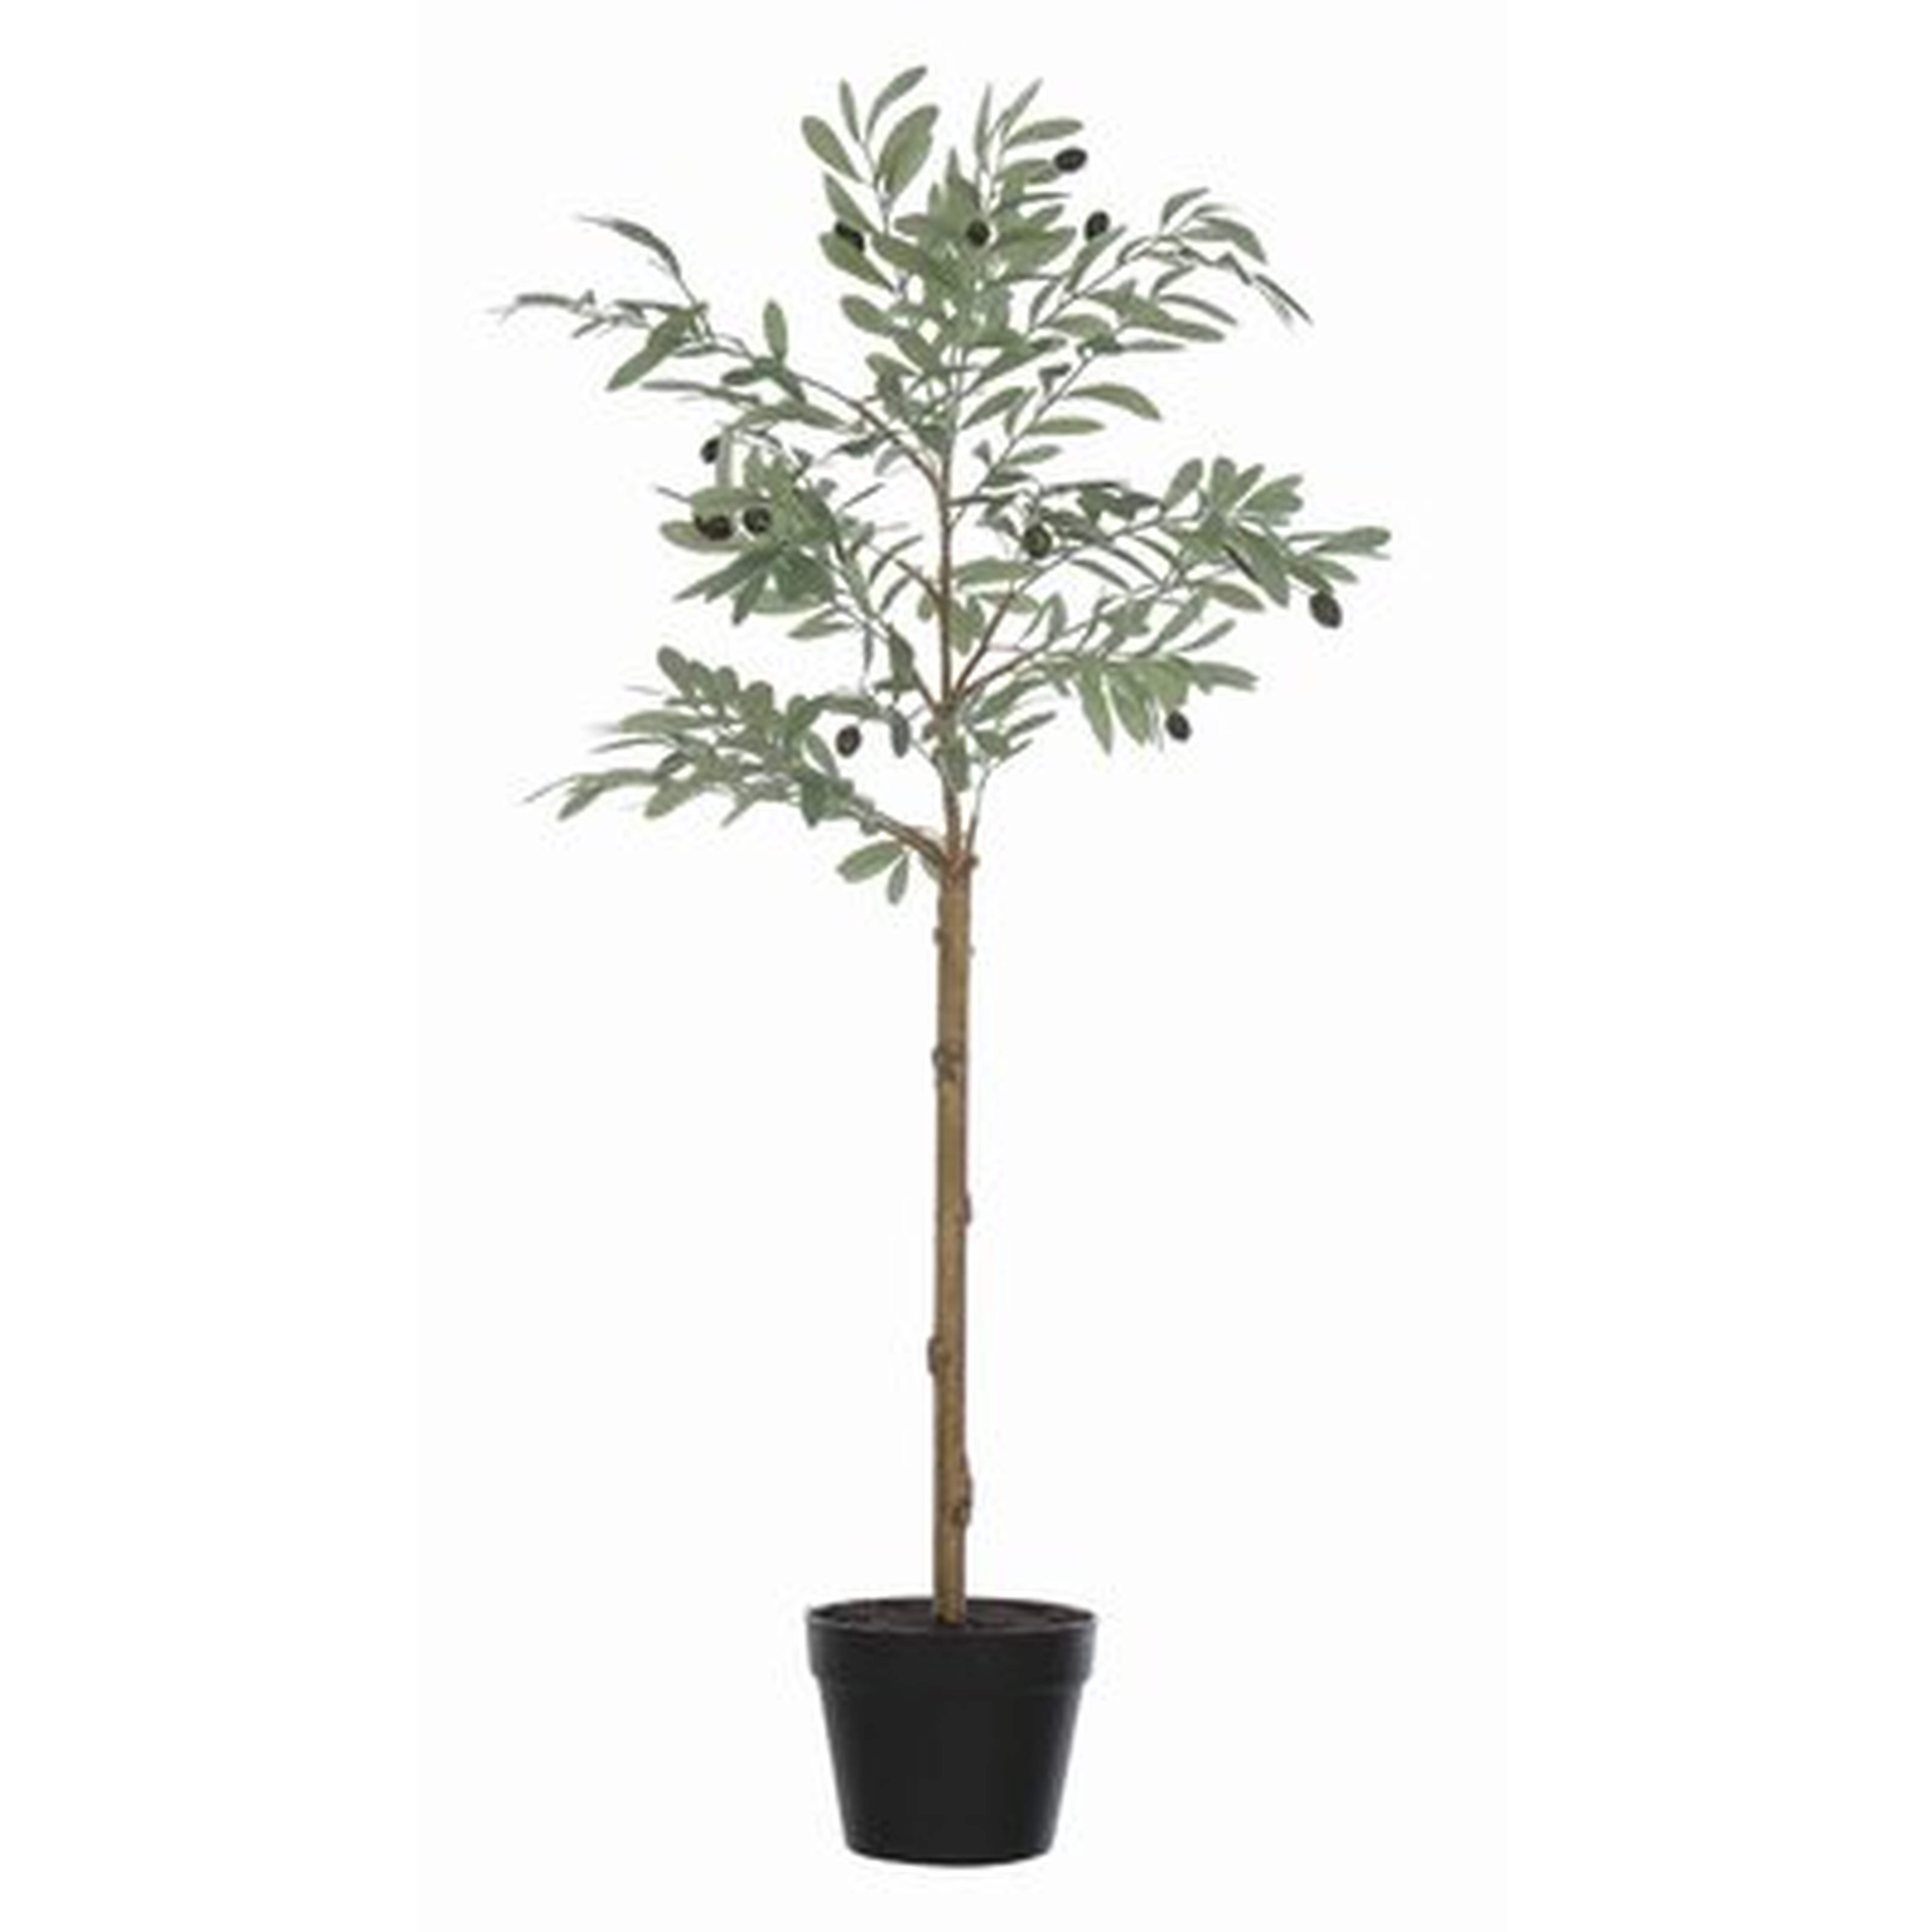 Olive Plant in Pot - Wayfair